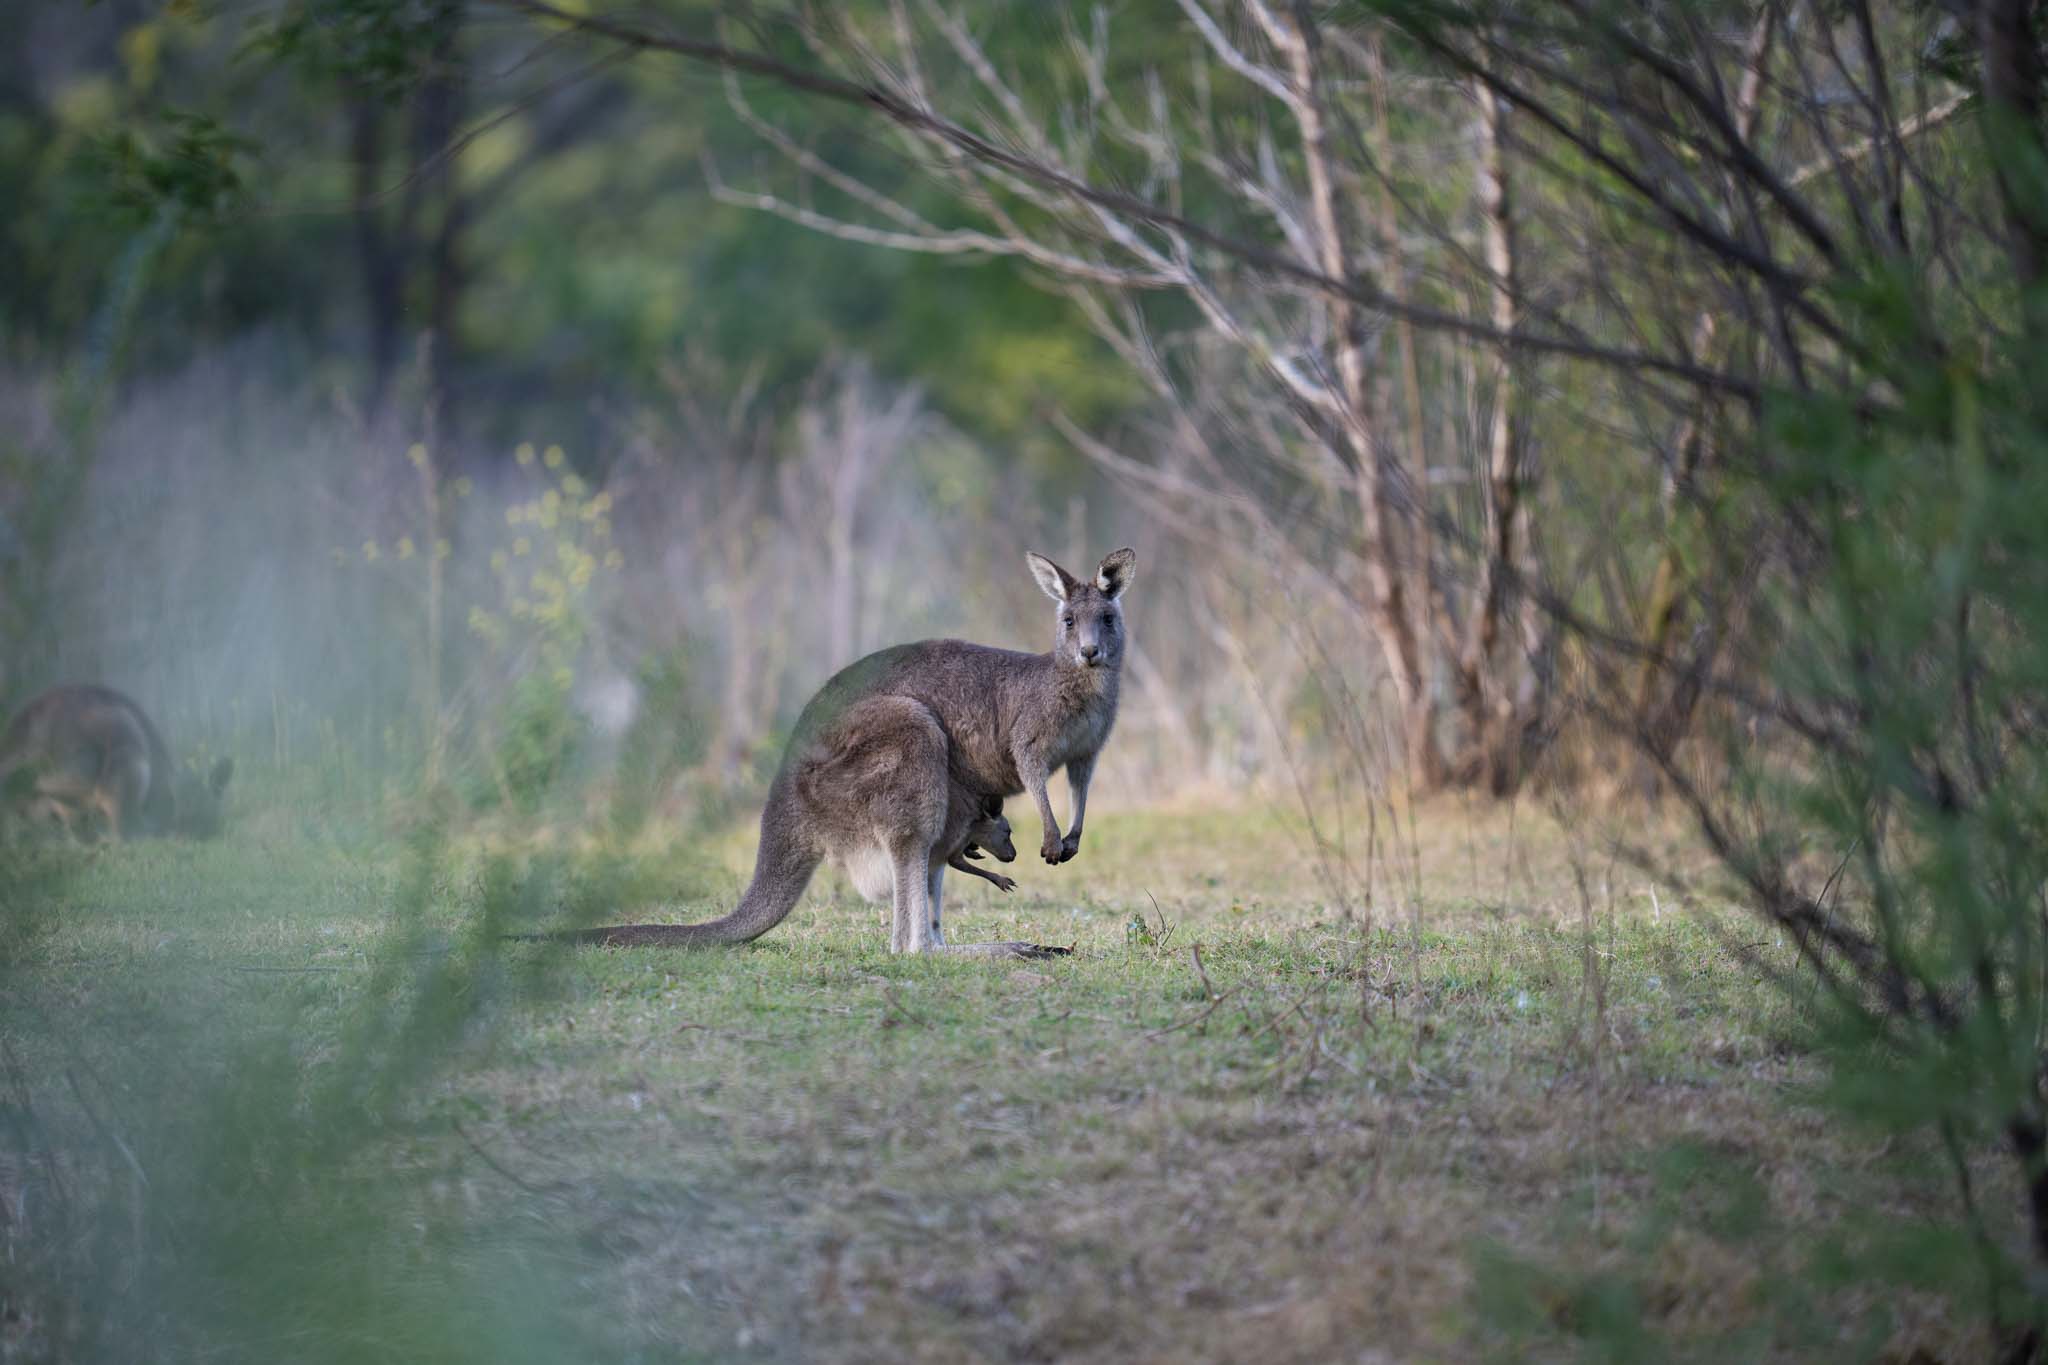 a kangaroo in a field